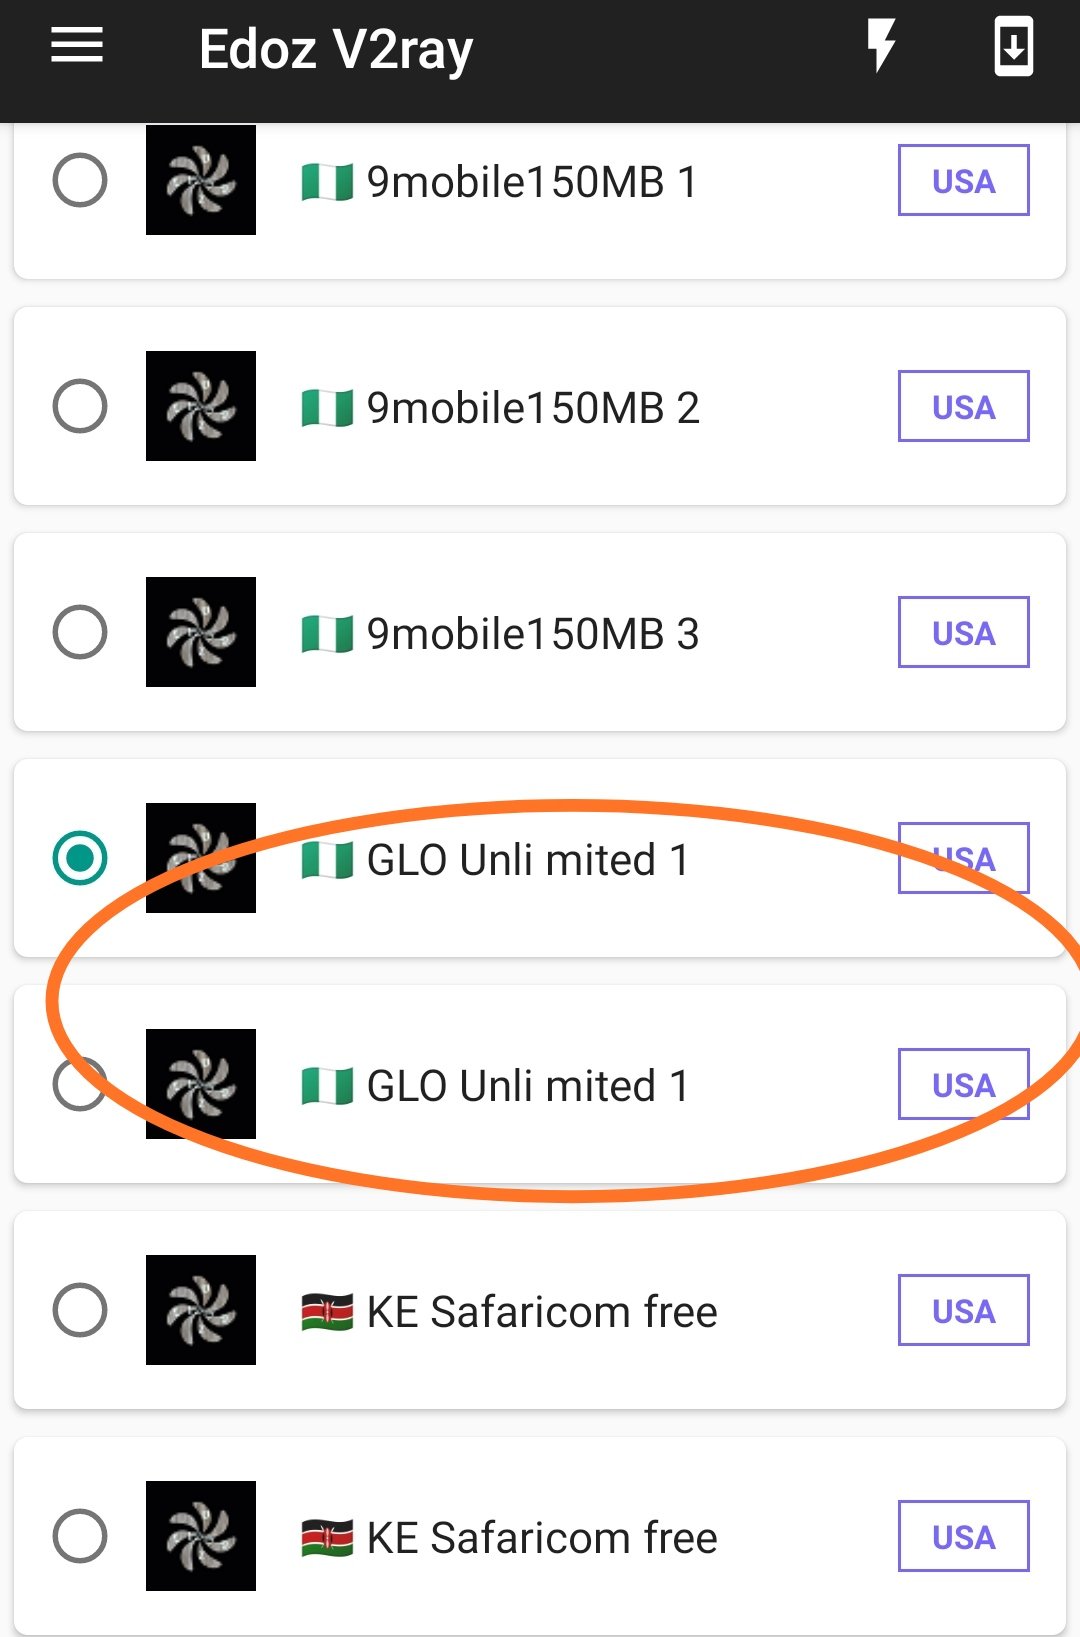 Latest Glo Unlimited free browsing Via Edoz V2ray VPN 2021